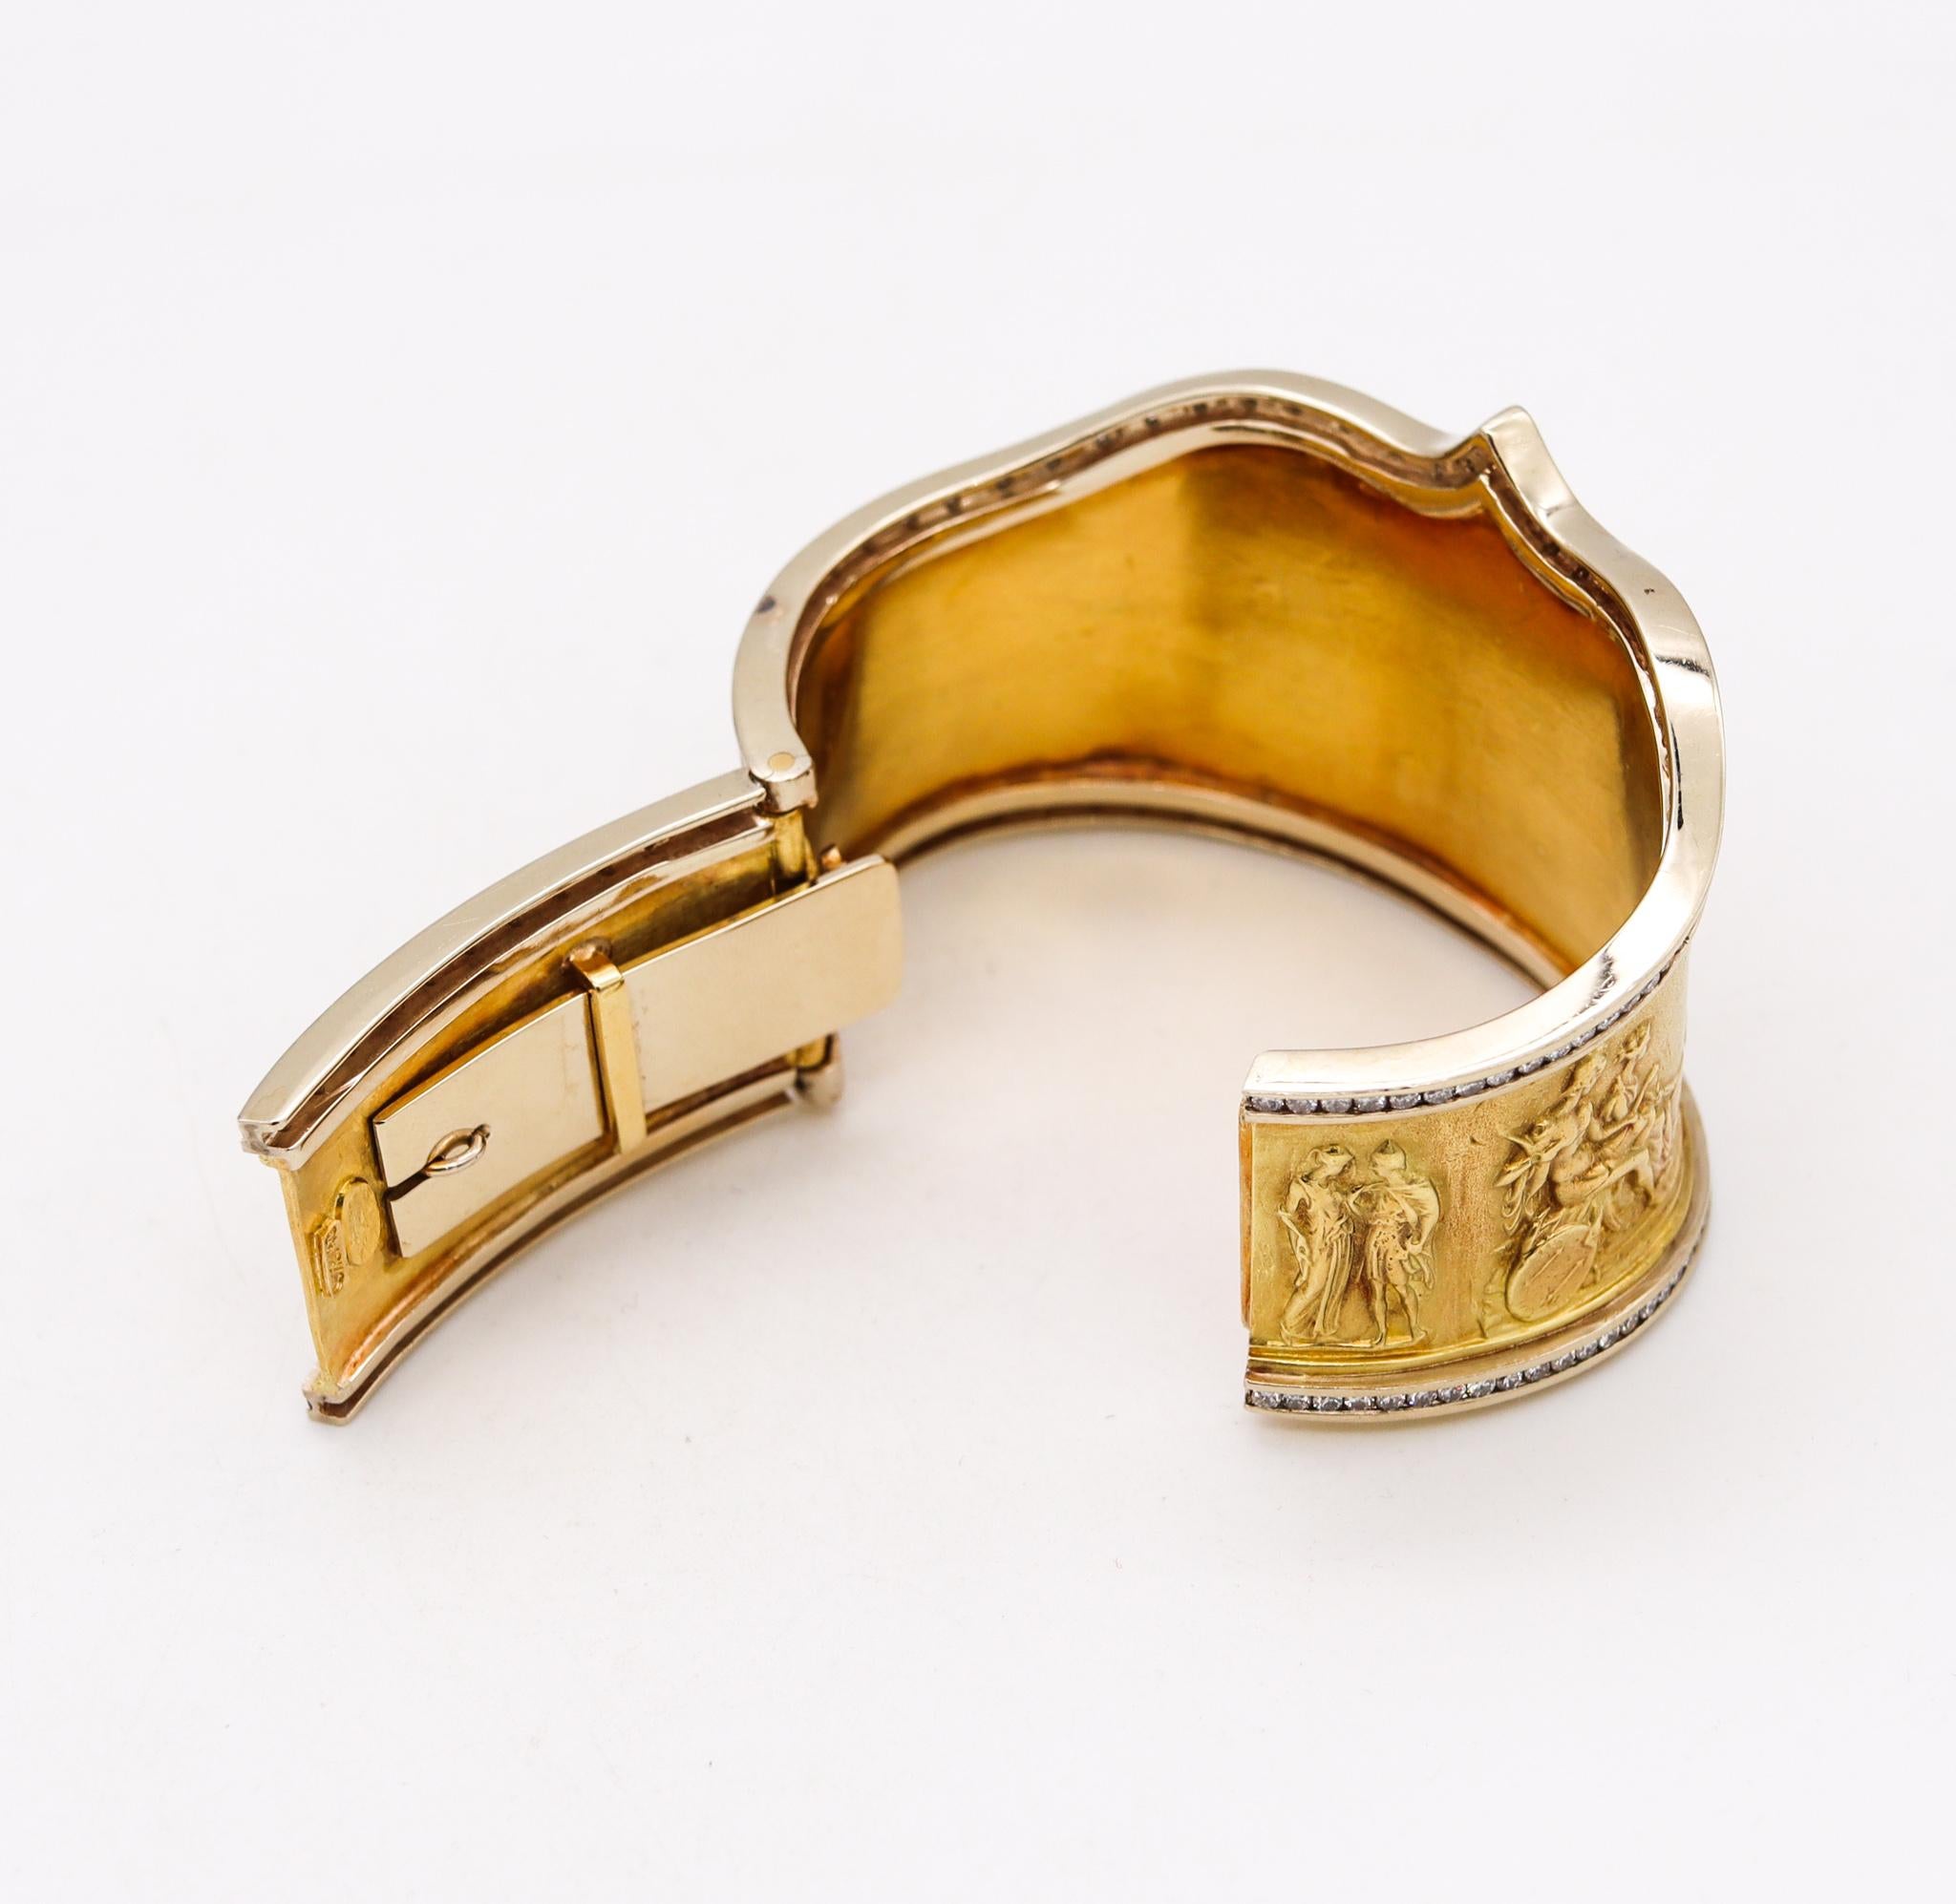 Classical Roman SeidenGang Rare Etruscan-Greek Revival Bracelet 18Kt Yellow Gold 5.94 Ct Diamond